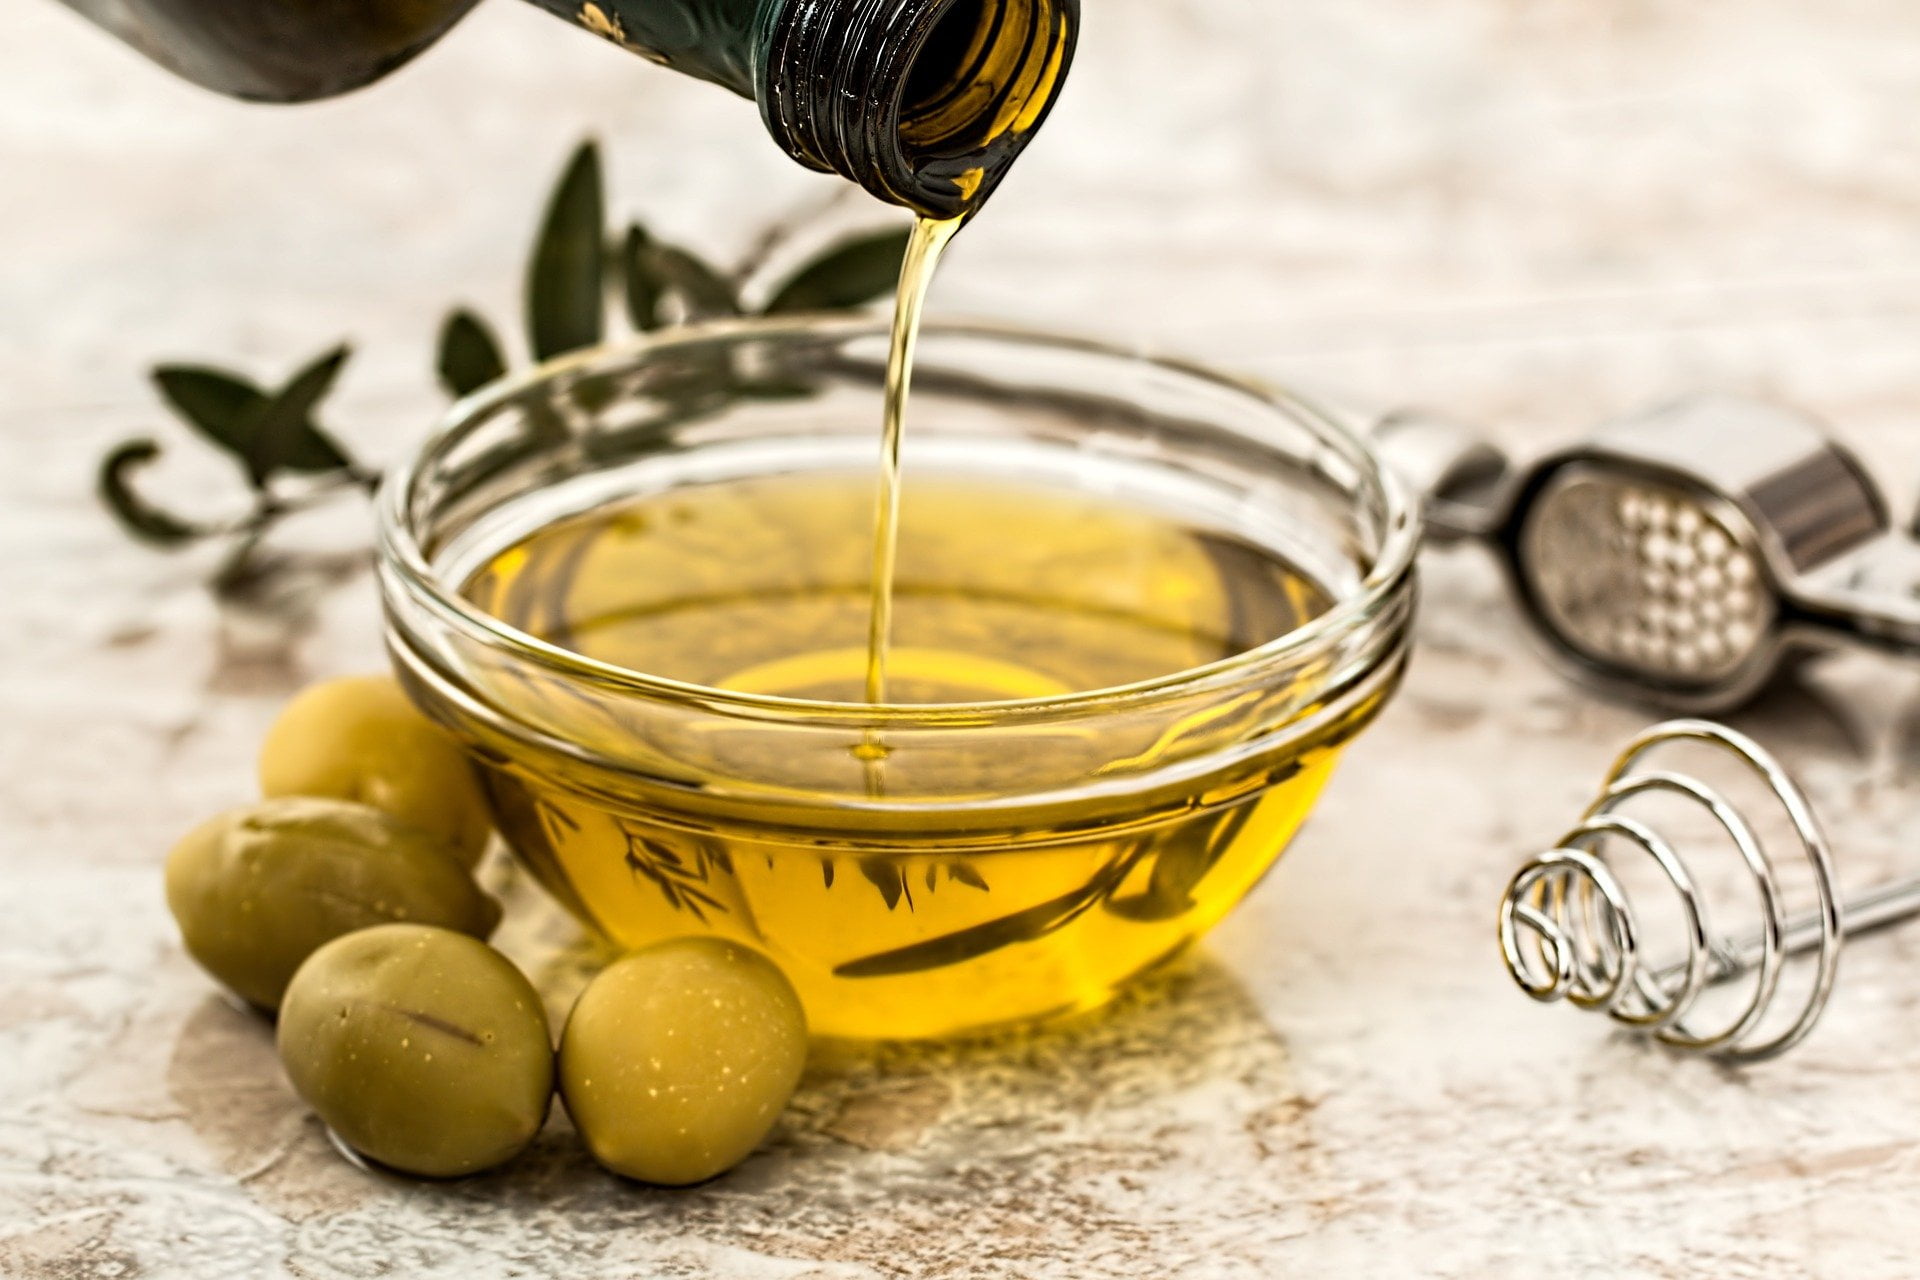 health benefits of olive oil - crete cuisine